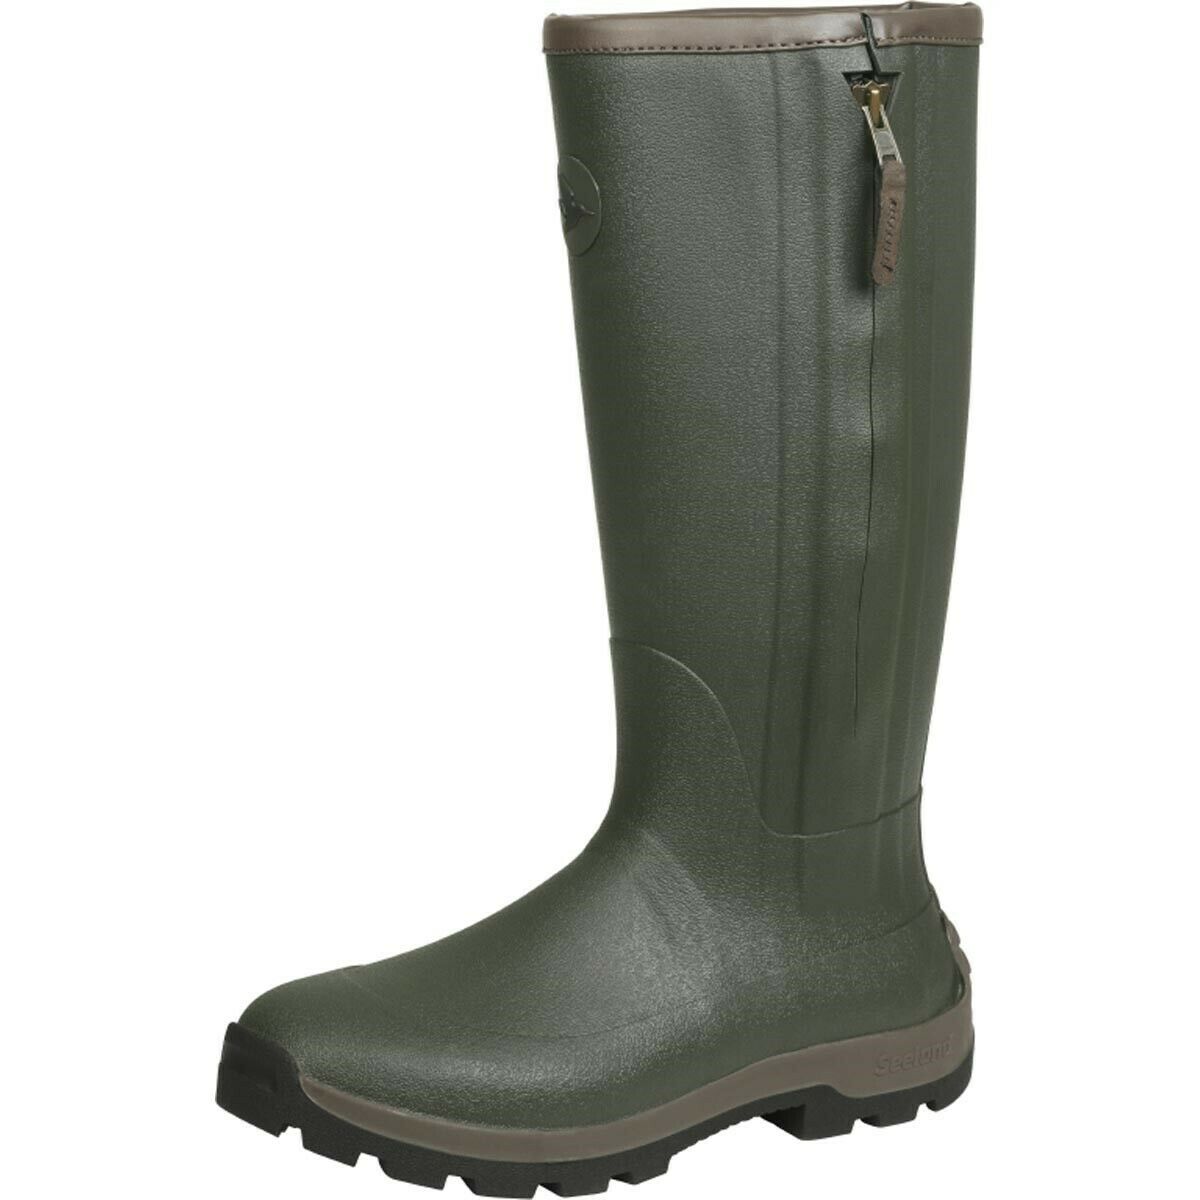 Seeland Noble Zip Wellington Boots - Dark Olive